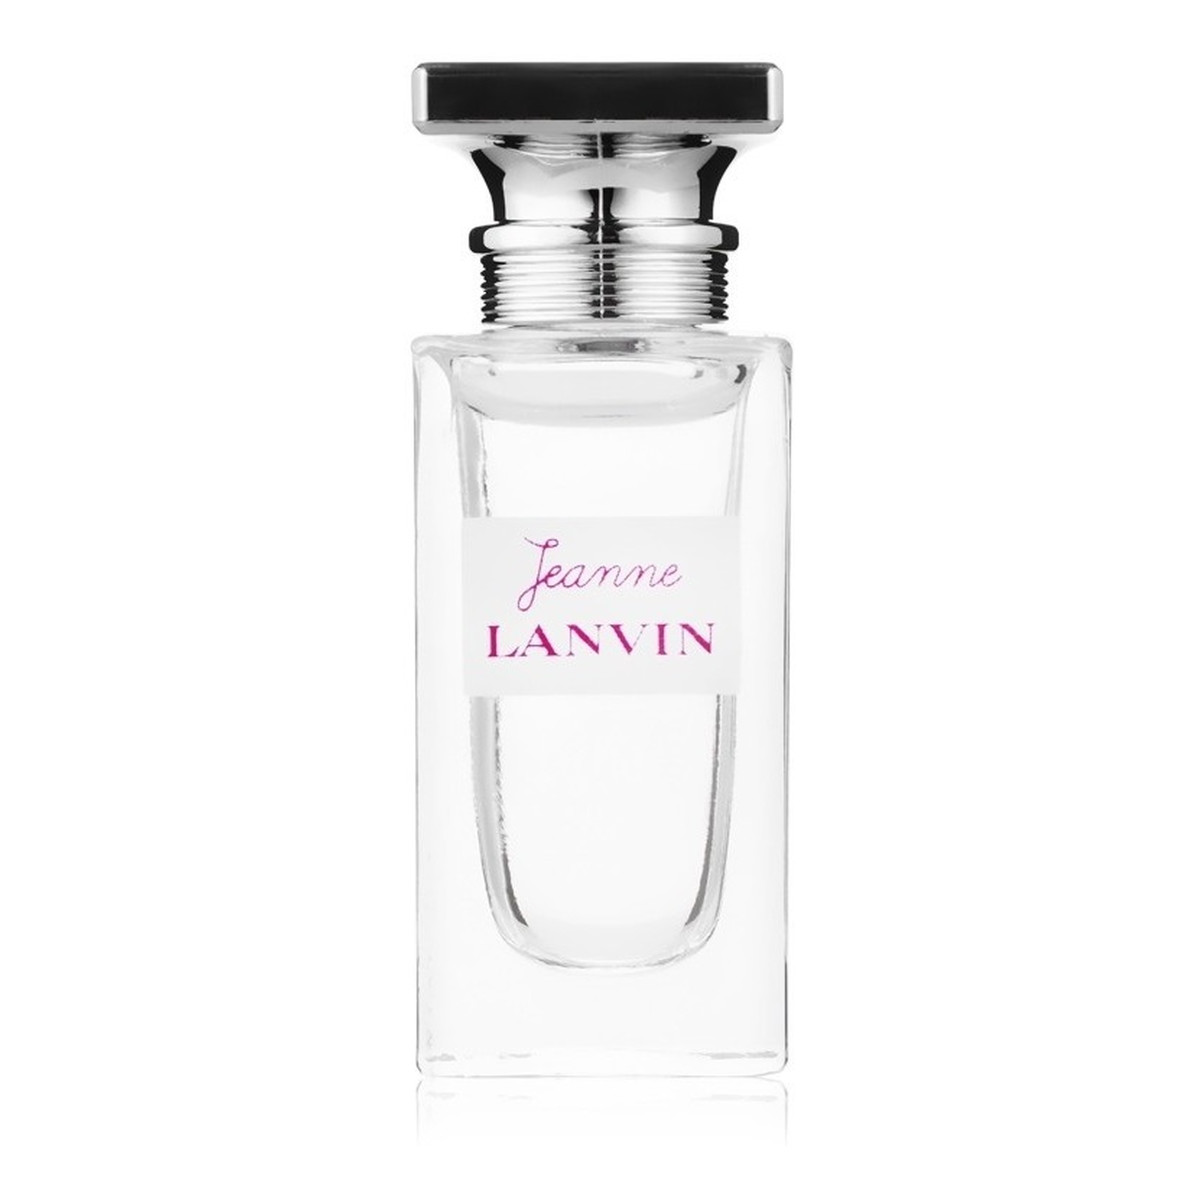 Lanvin Jeanne Woda perfumowana miniatura 4,5 ml 4.5ml